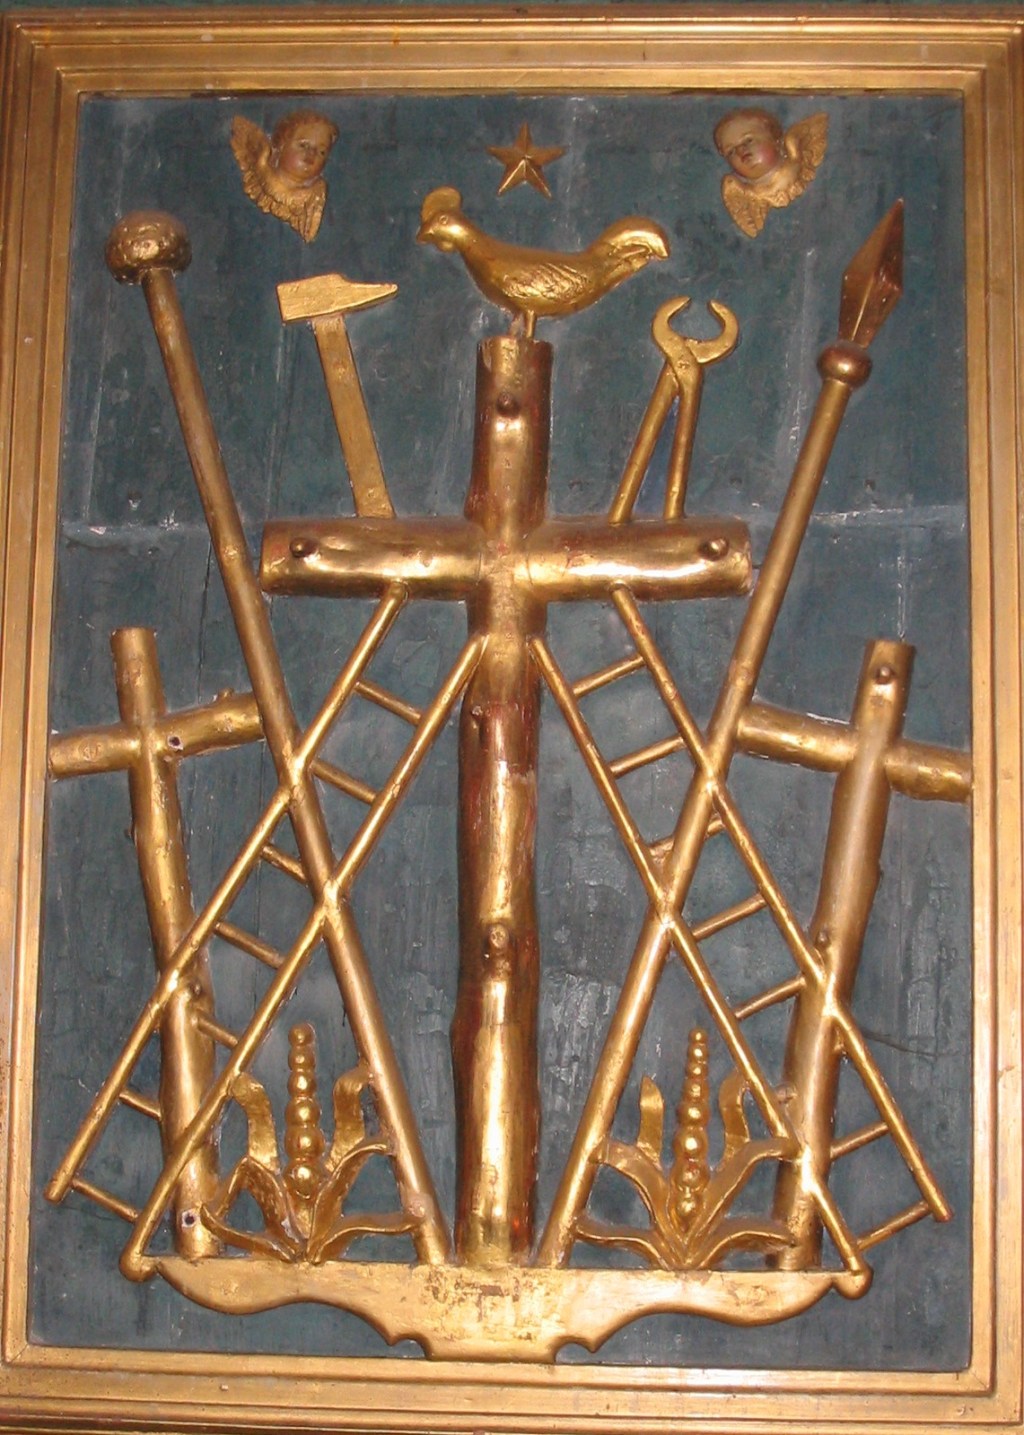 The-instruments-of-the-Passion-Saint-Pierre-church-in-Collonges-la-rouge